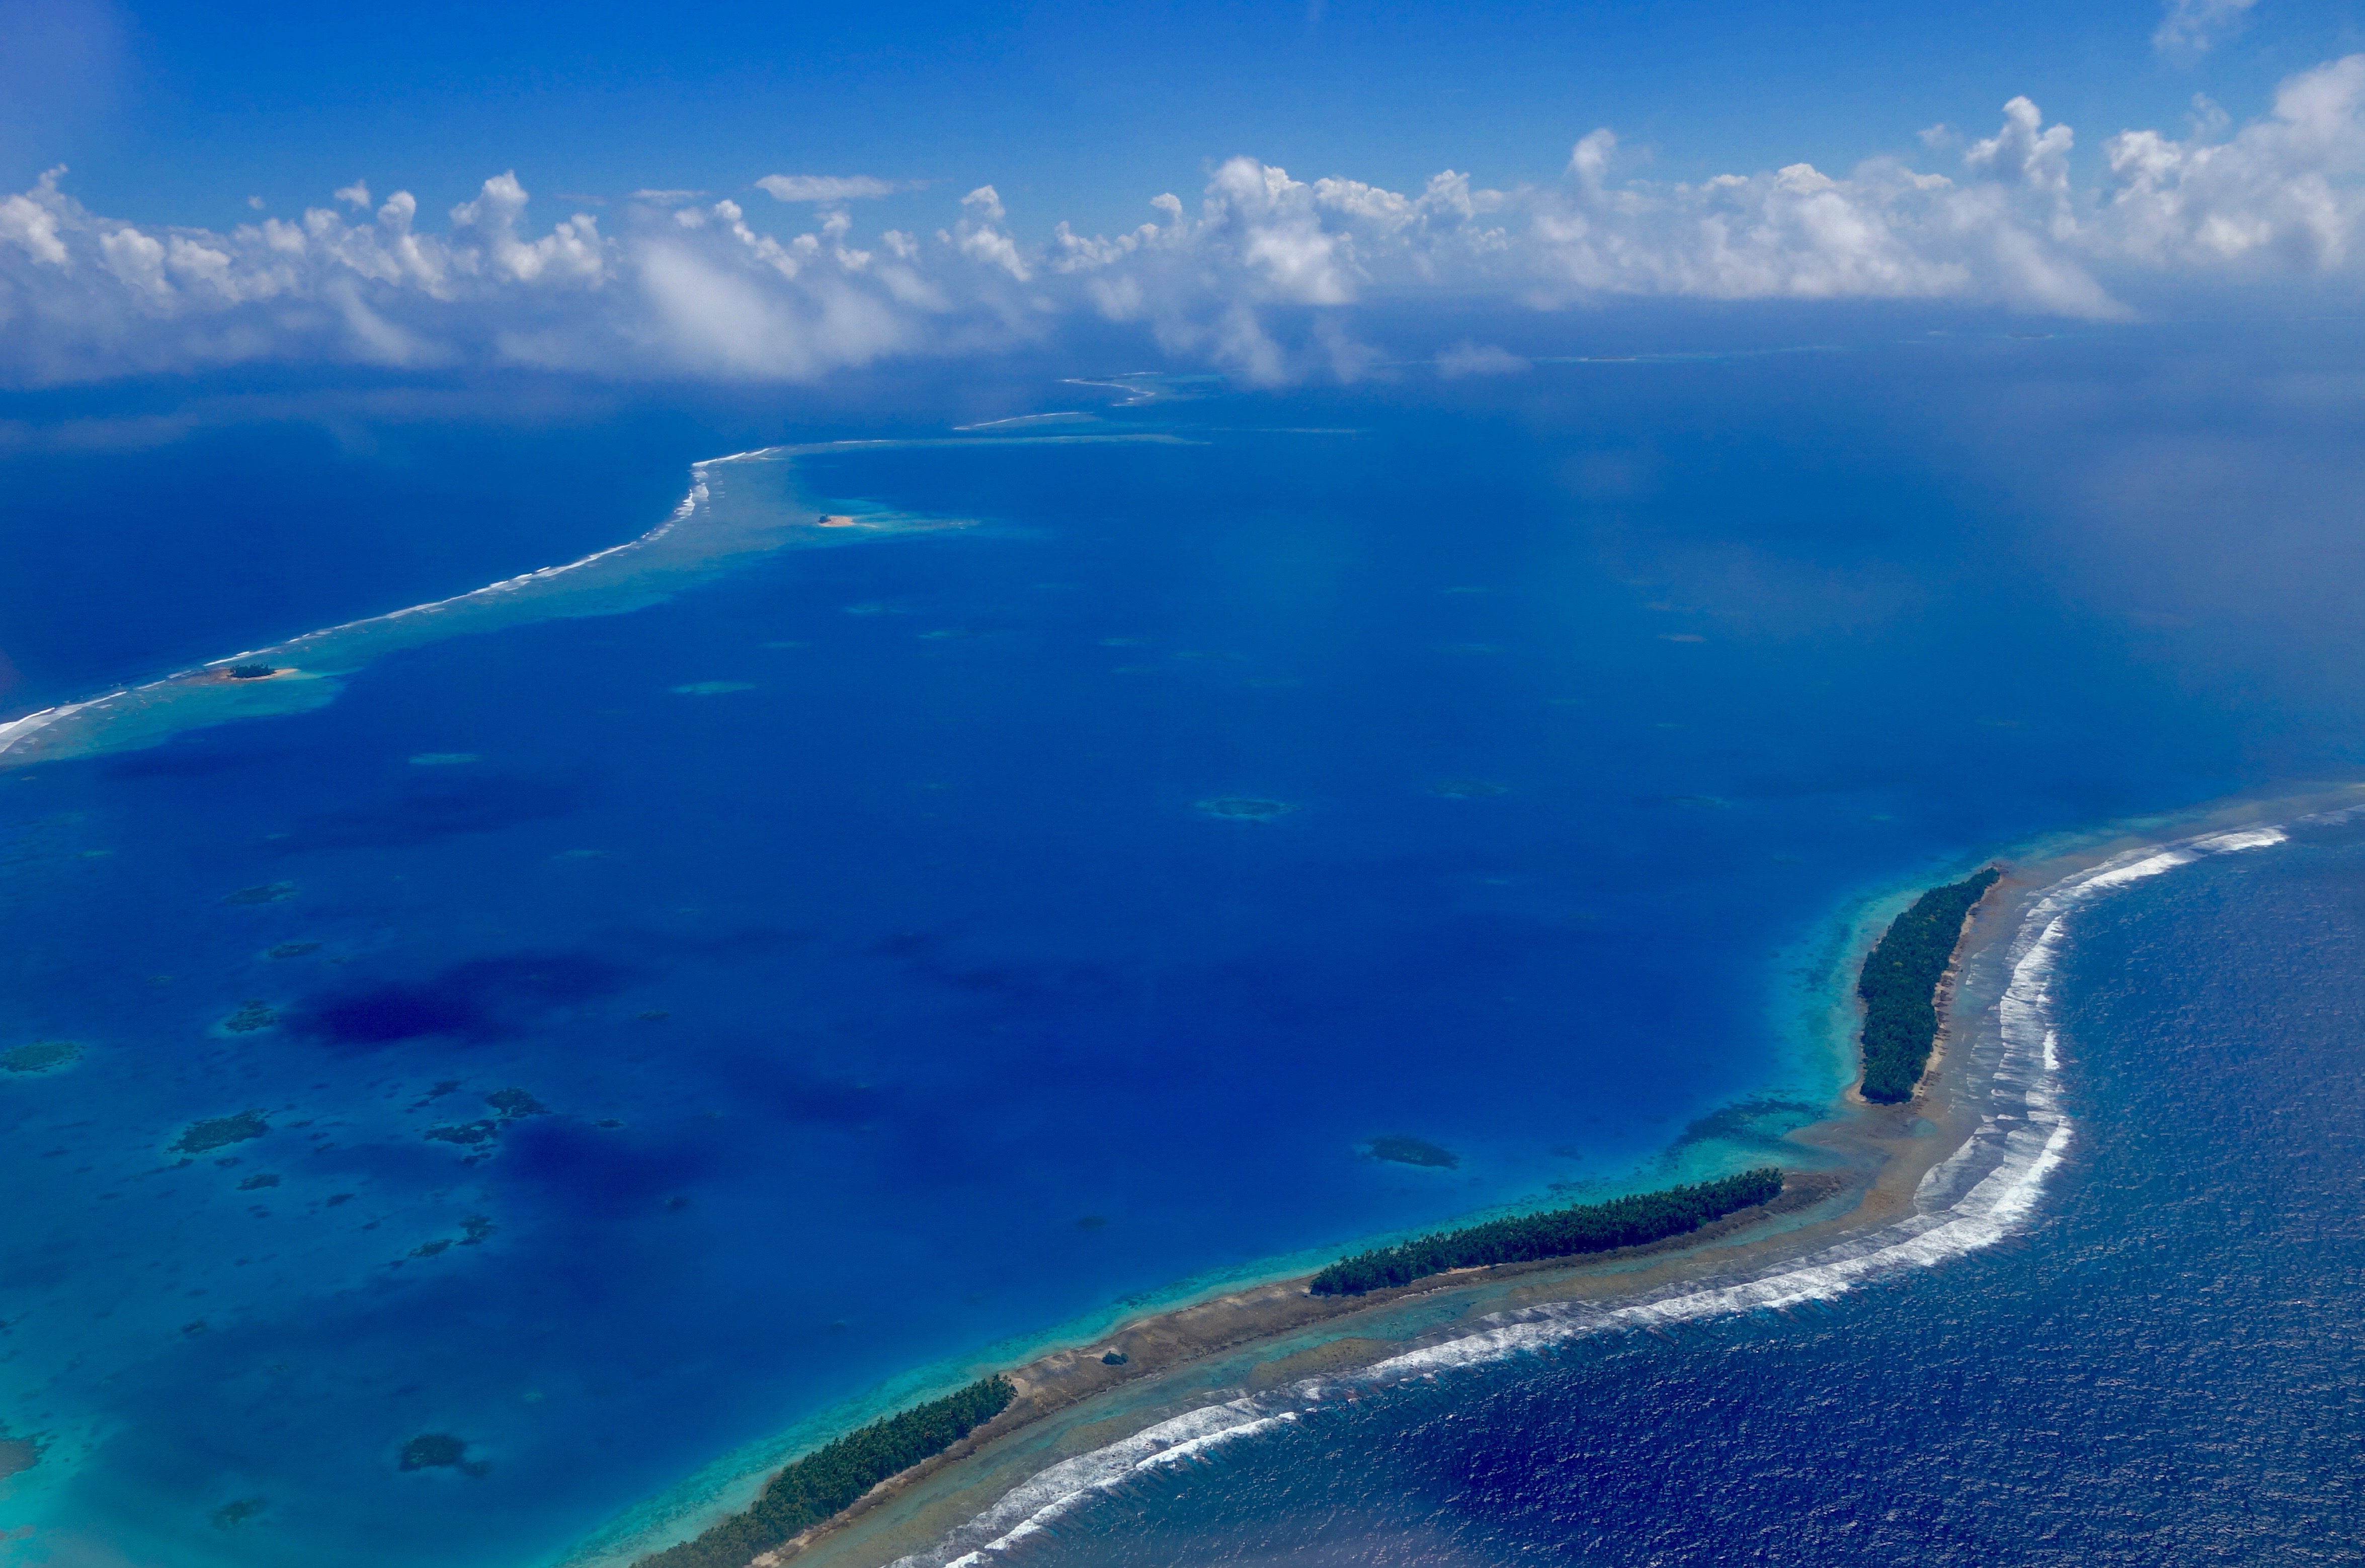 Канал тихого океана. Остров Фунафути, Тувалу. Атолл Тувалу. Полинезийское государство Тувалу. Атолл в тихом океане.